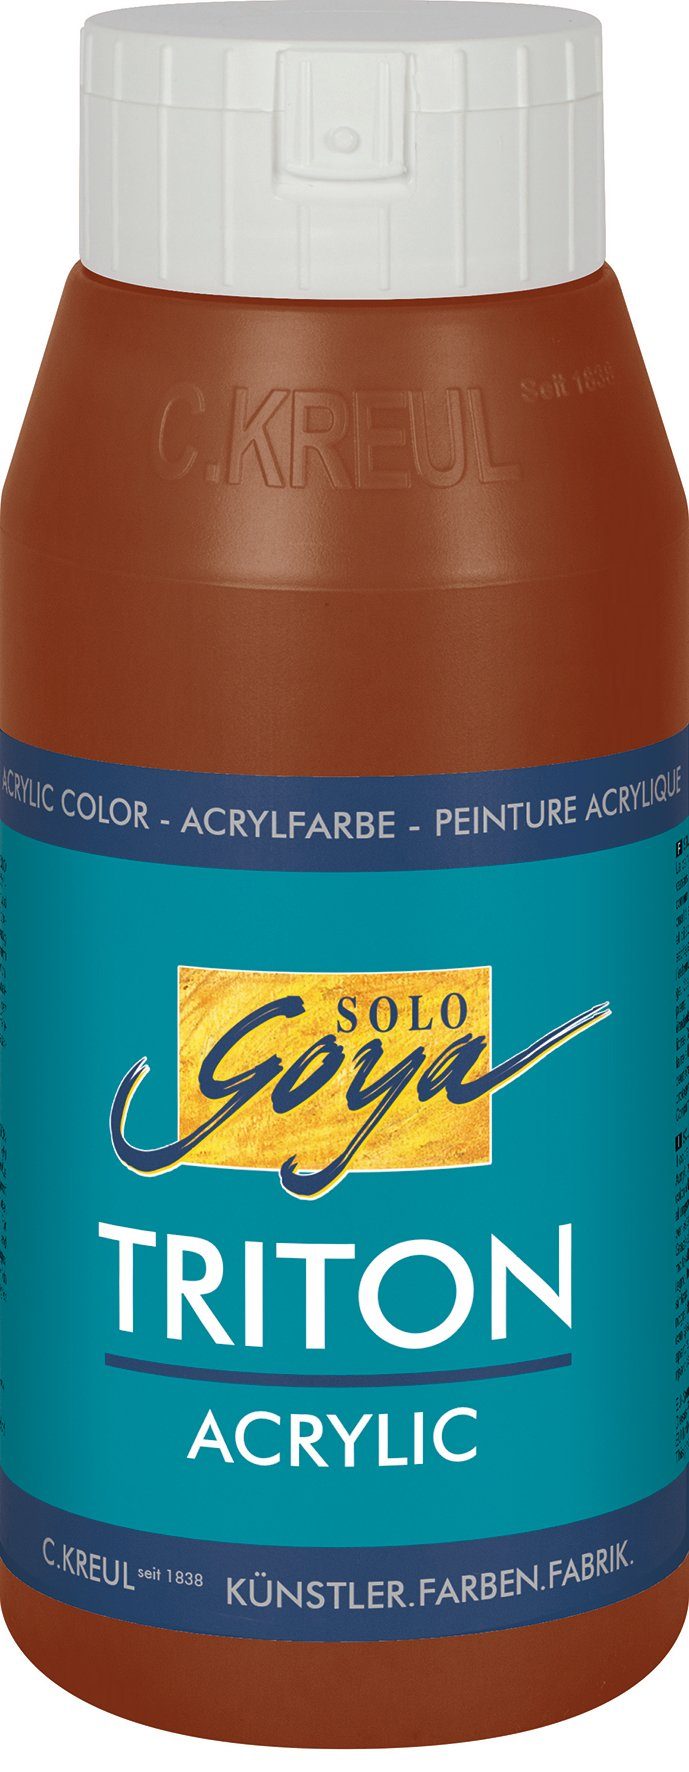 Acrylfarbe Kreul Triton ml Oxydbraun-Dunkel Solo 750 Goya Acrylic,